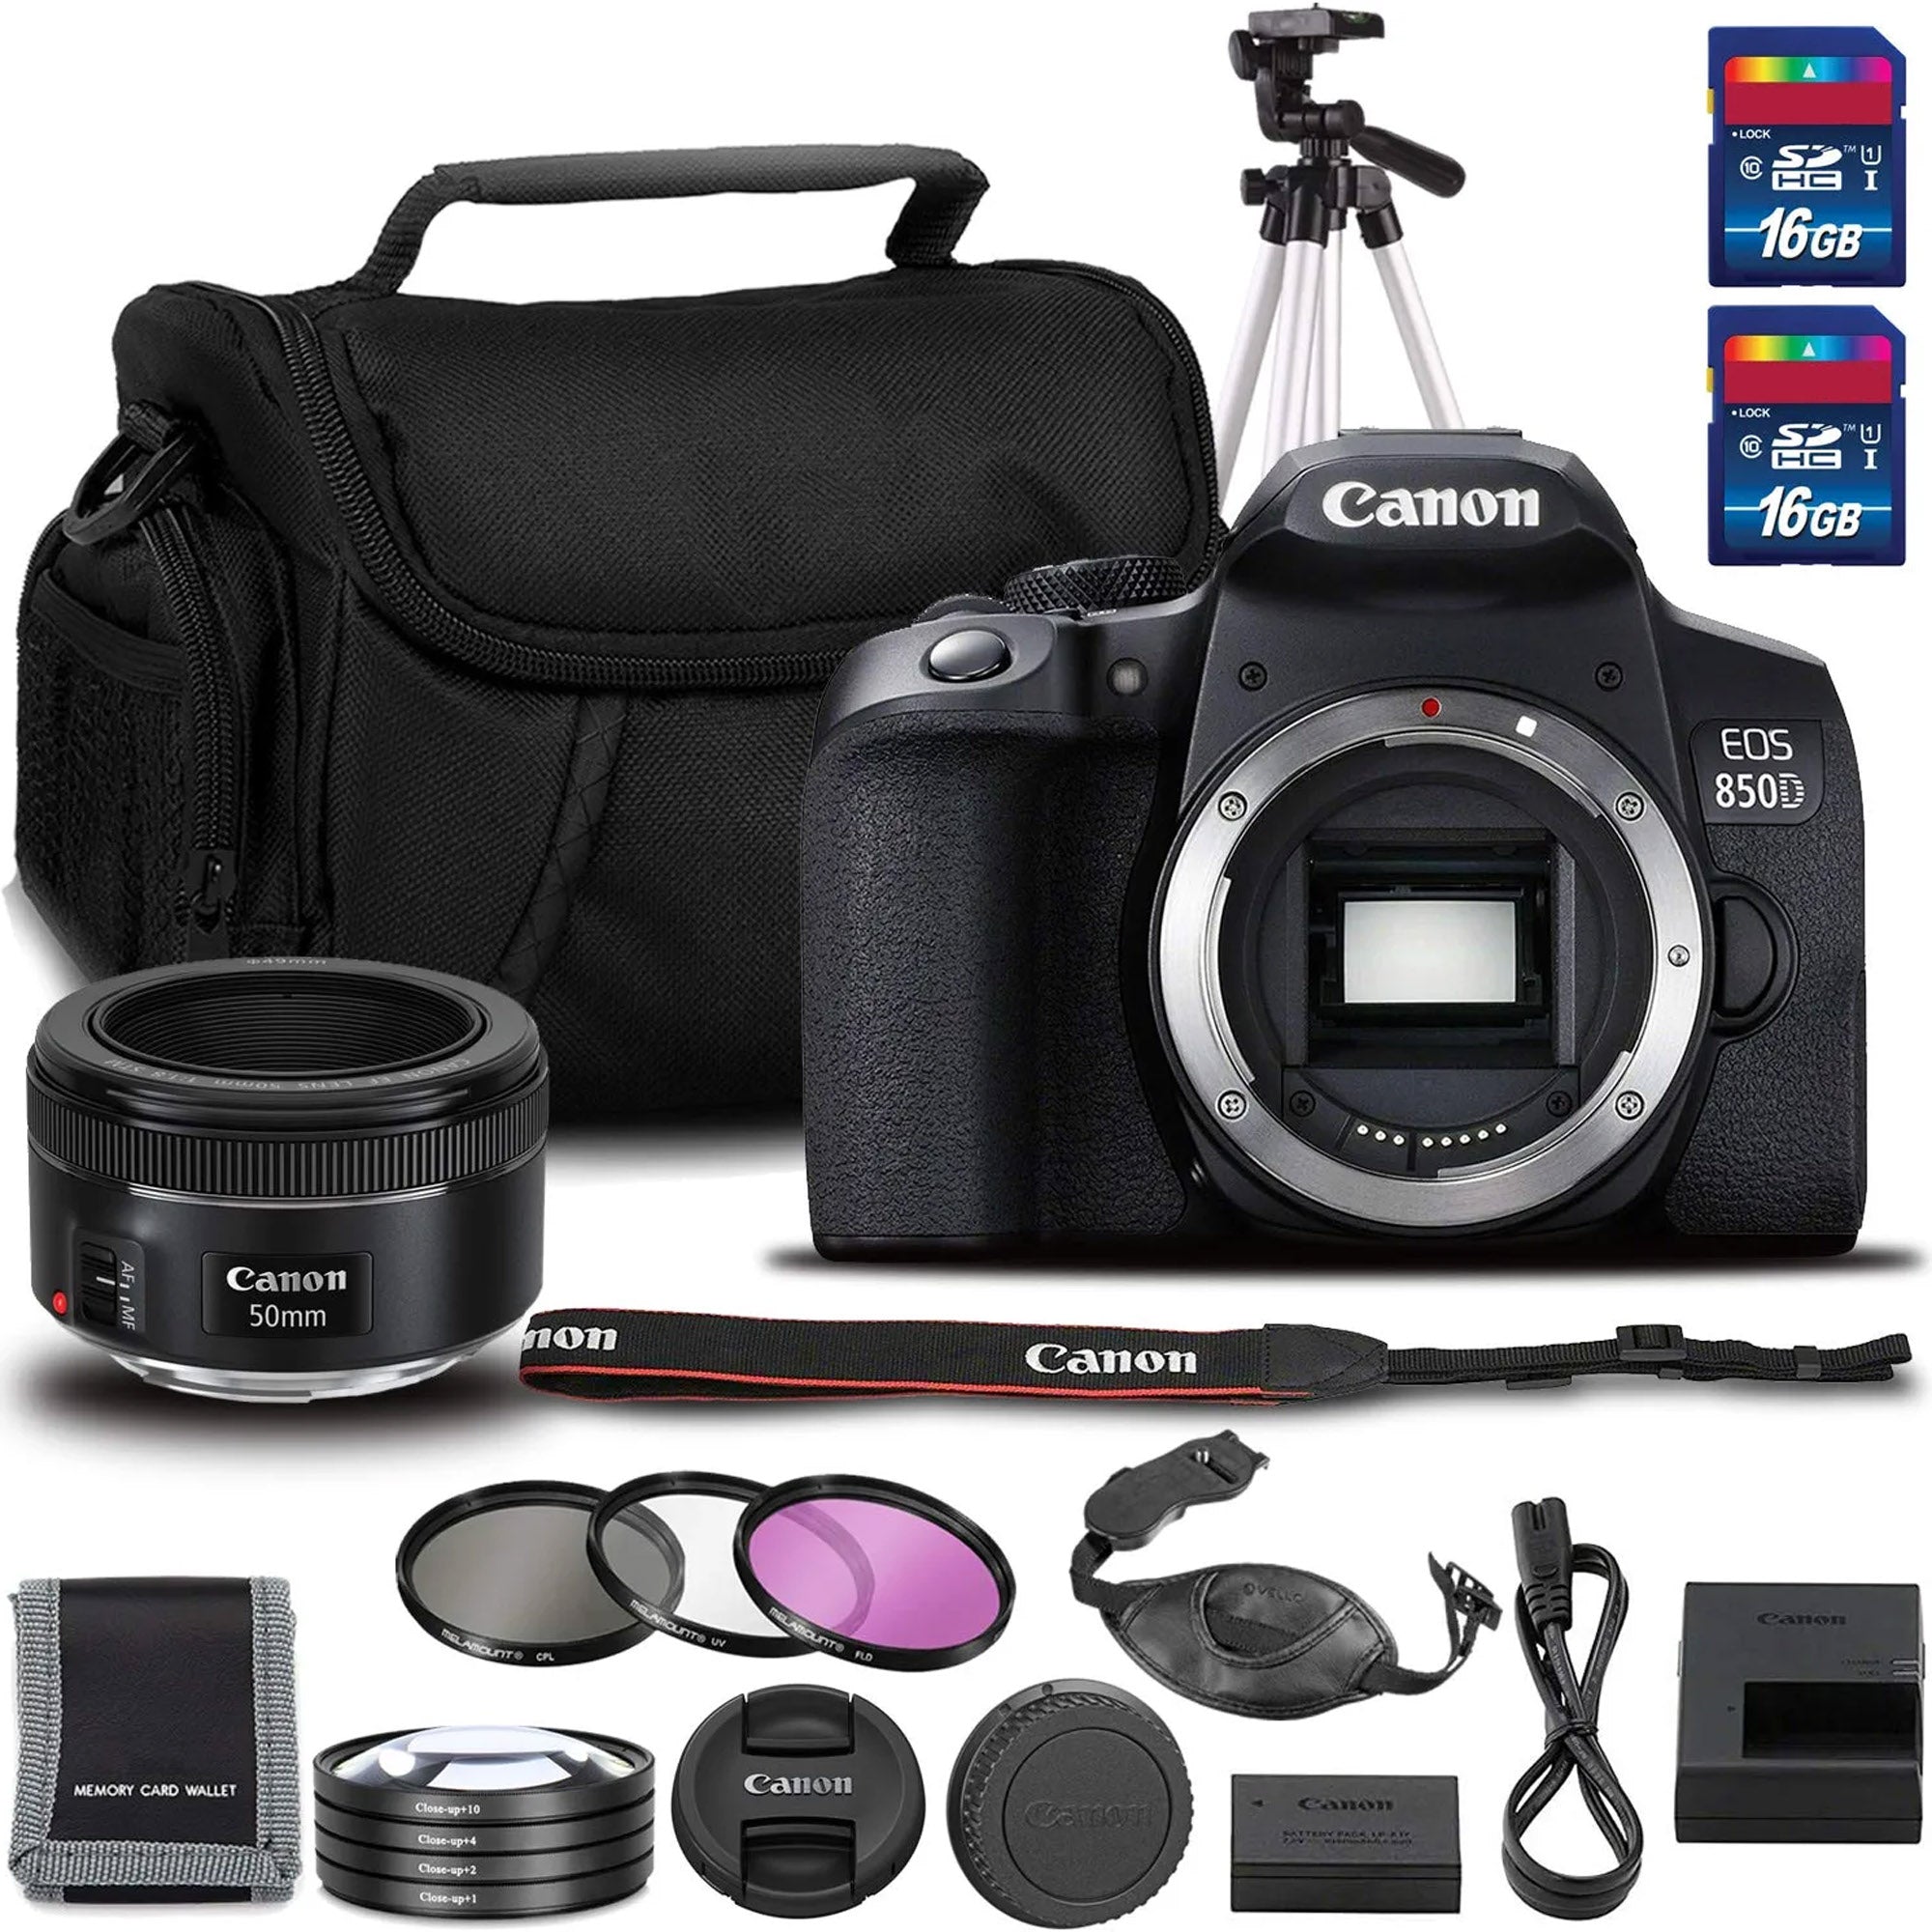 Canon EOS 850D DSLR Camera with 50mm F 1.8 STM Lens (Intl Model) + Filter Kits + Full Size Tripod + Memory Kit + More